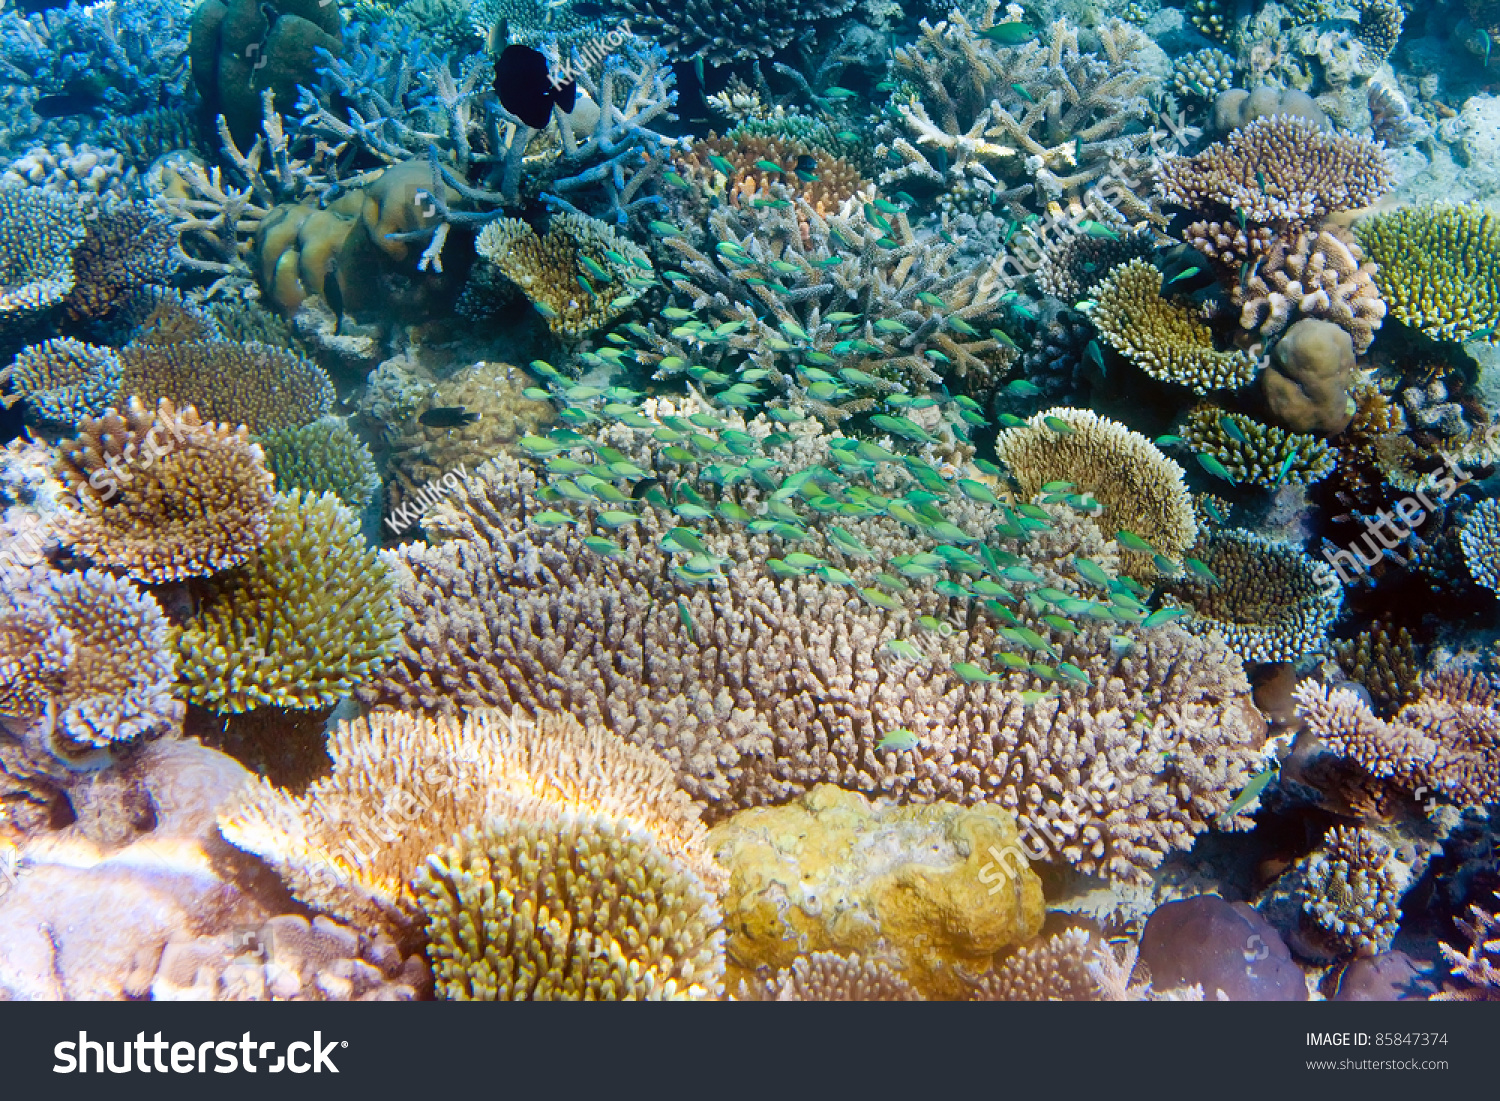 Indian ocean. Underwater world. Fishes in corals. #85847374